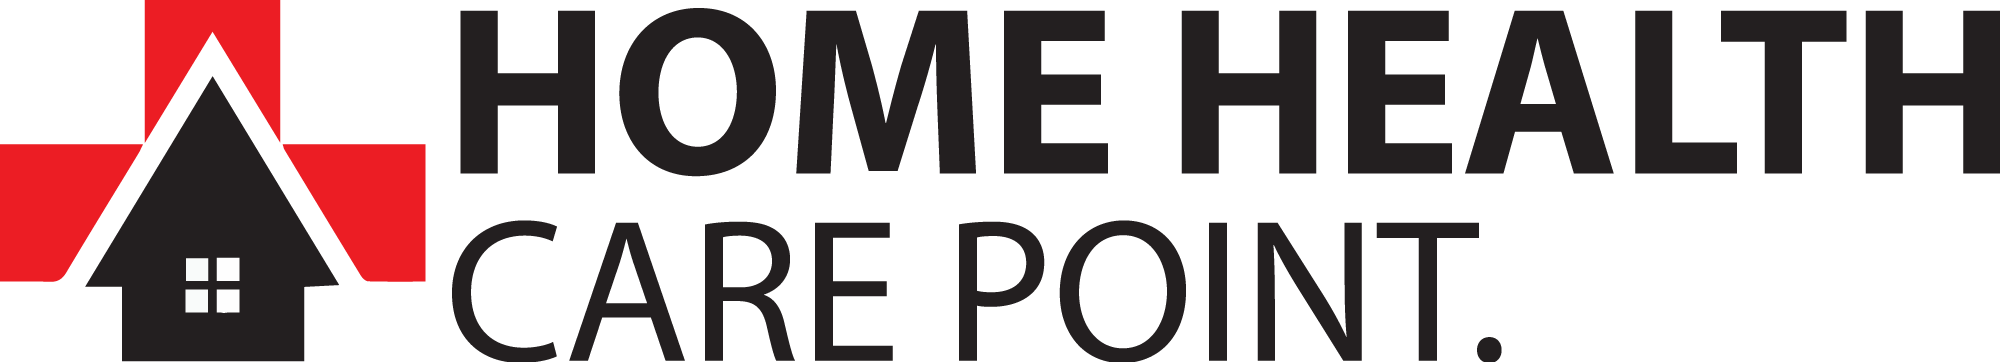 Home Health Care Point Logo